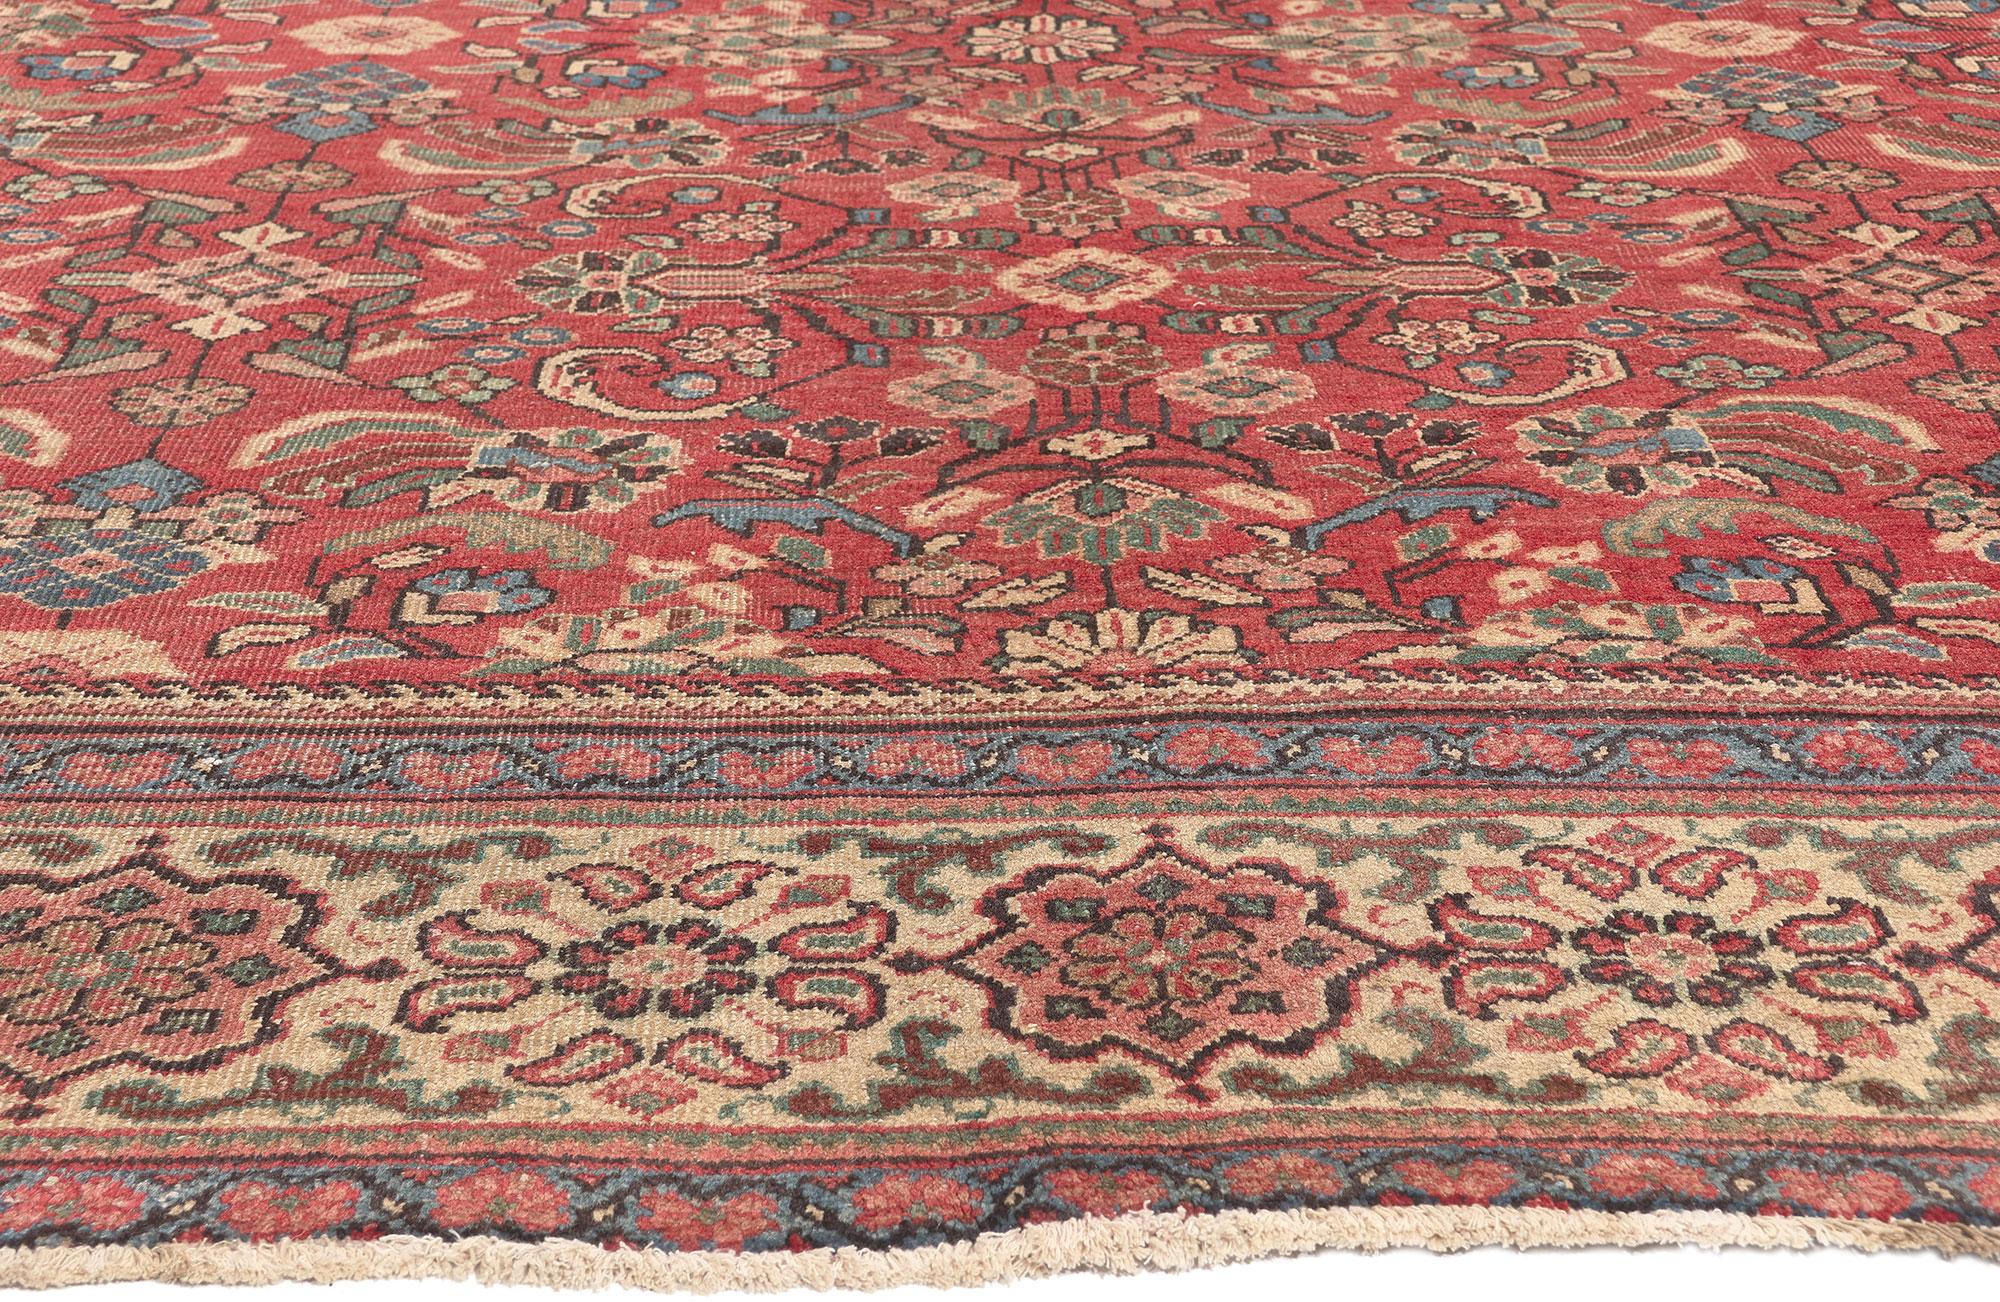 Hand-Knotted Vintage Persian Mahal Rug, Traditional Elegance Meets Subtle Sophistication